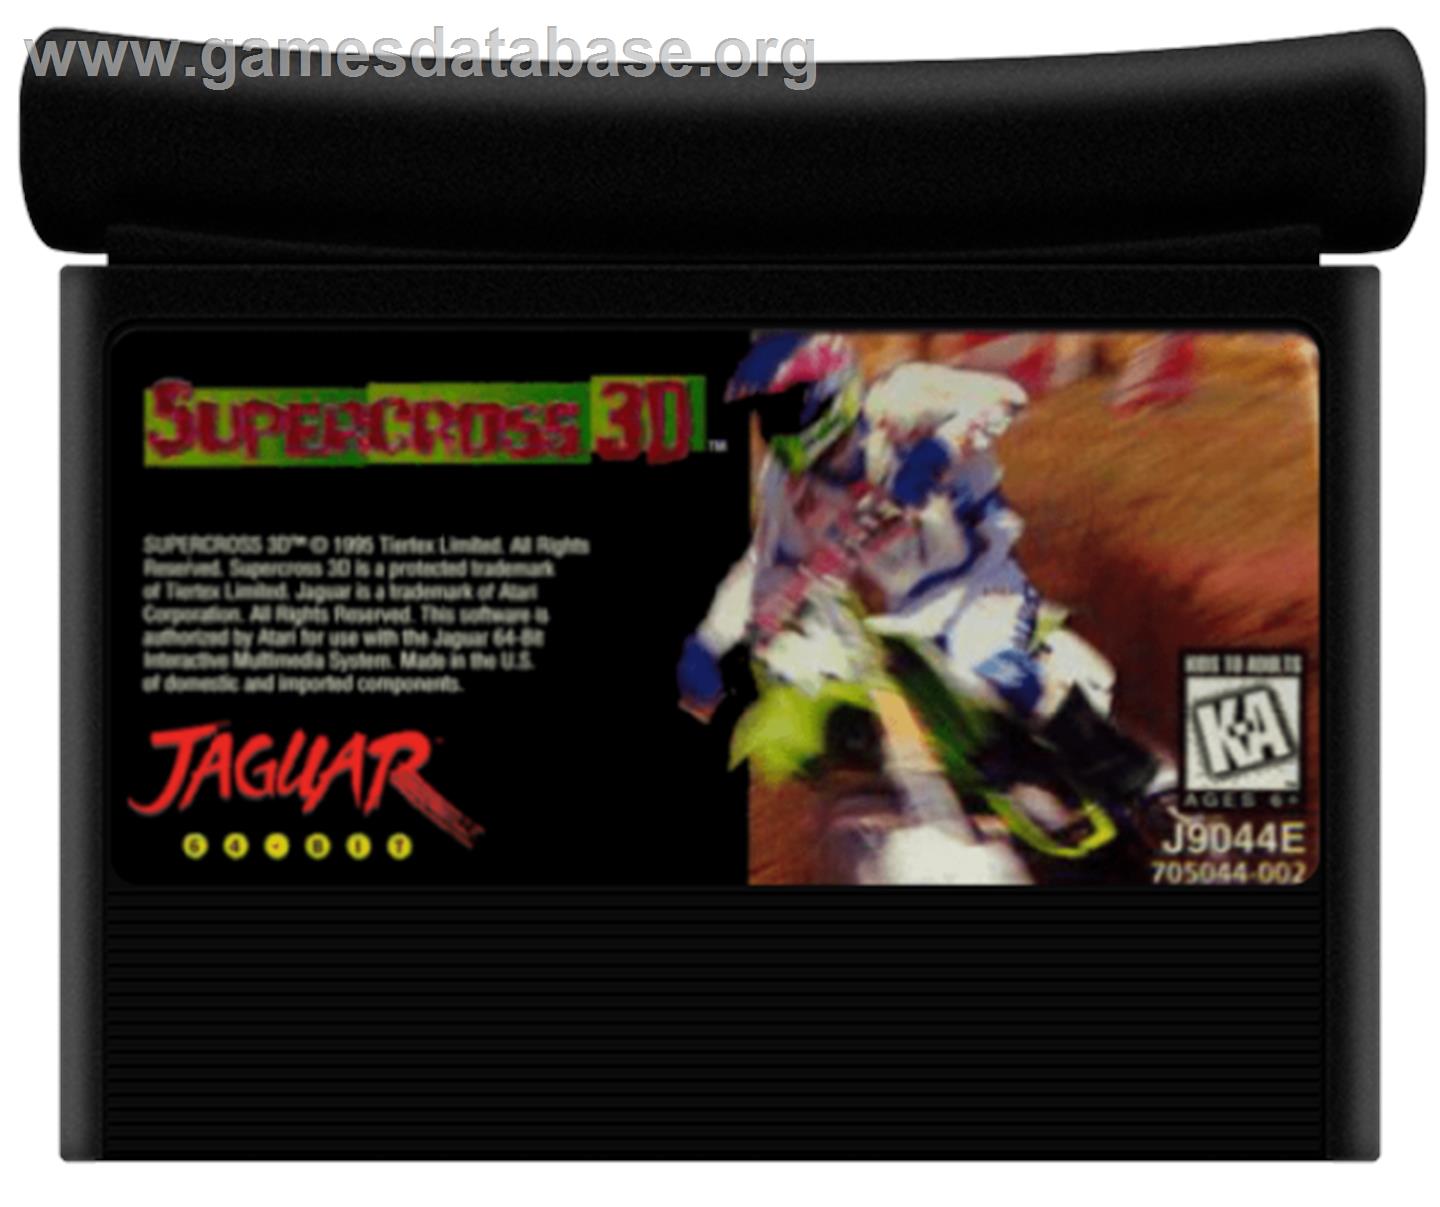 Super Cross 3D - Atari Jaguar - Artwork - Cartridge